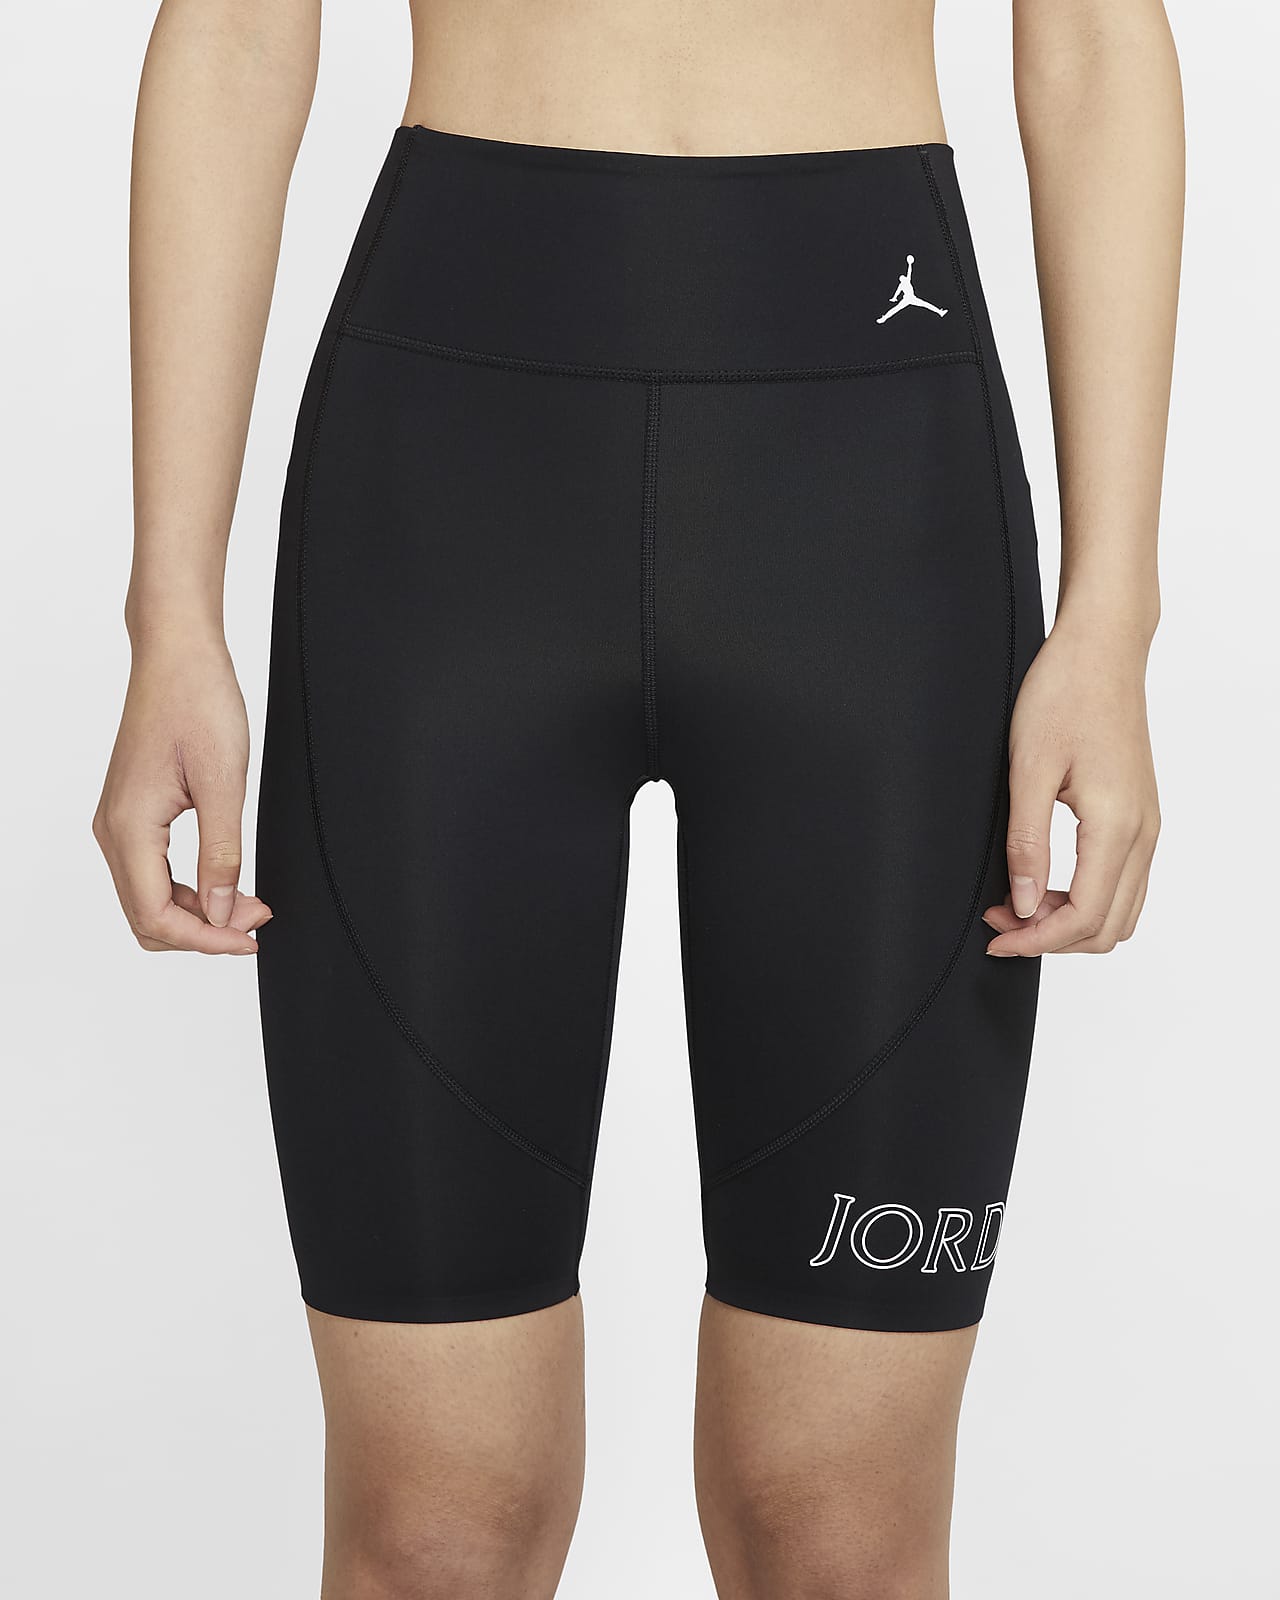 jordan cycling shorts